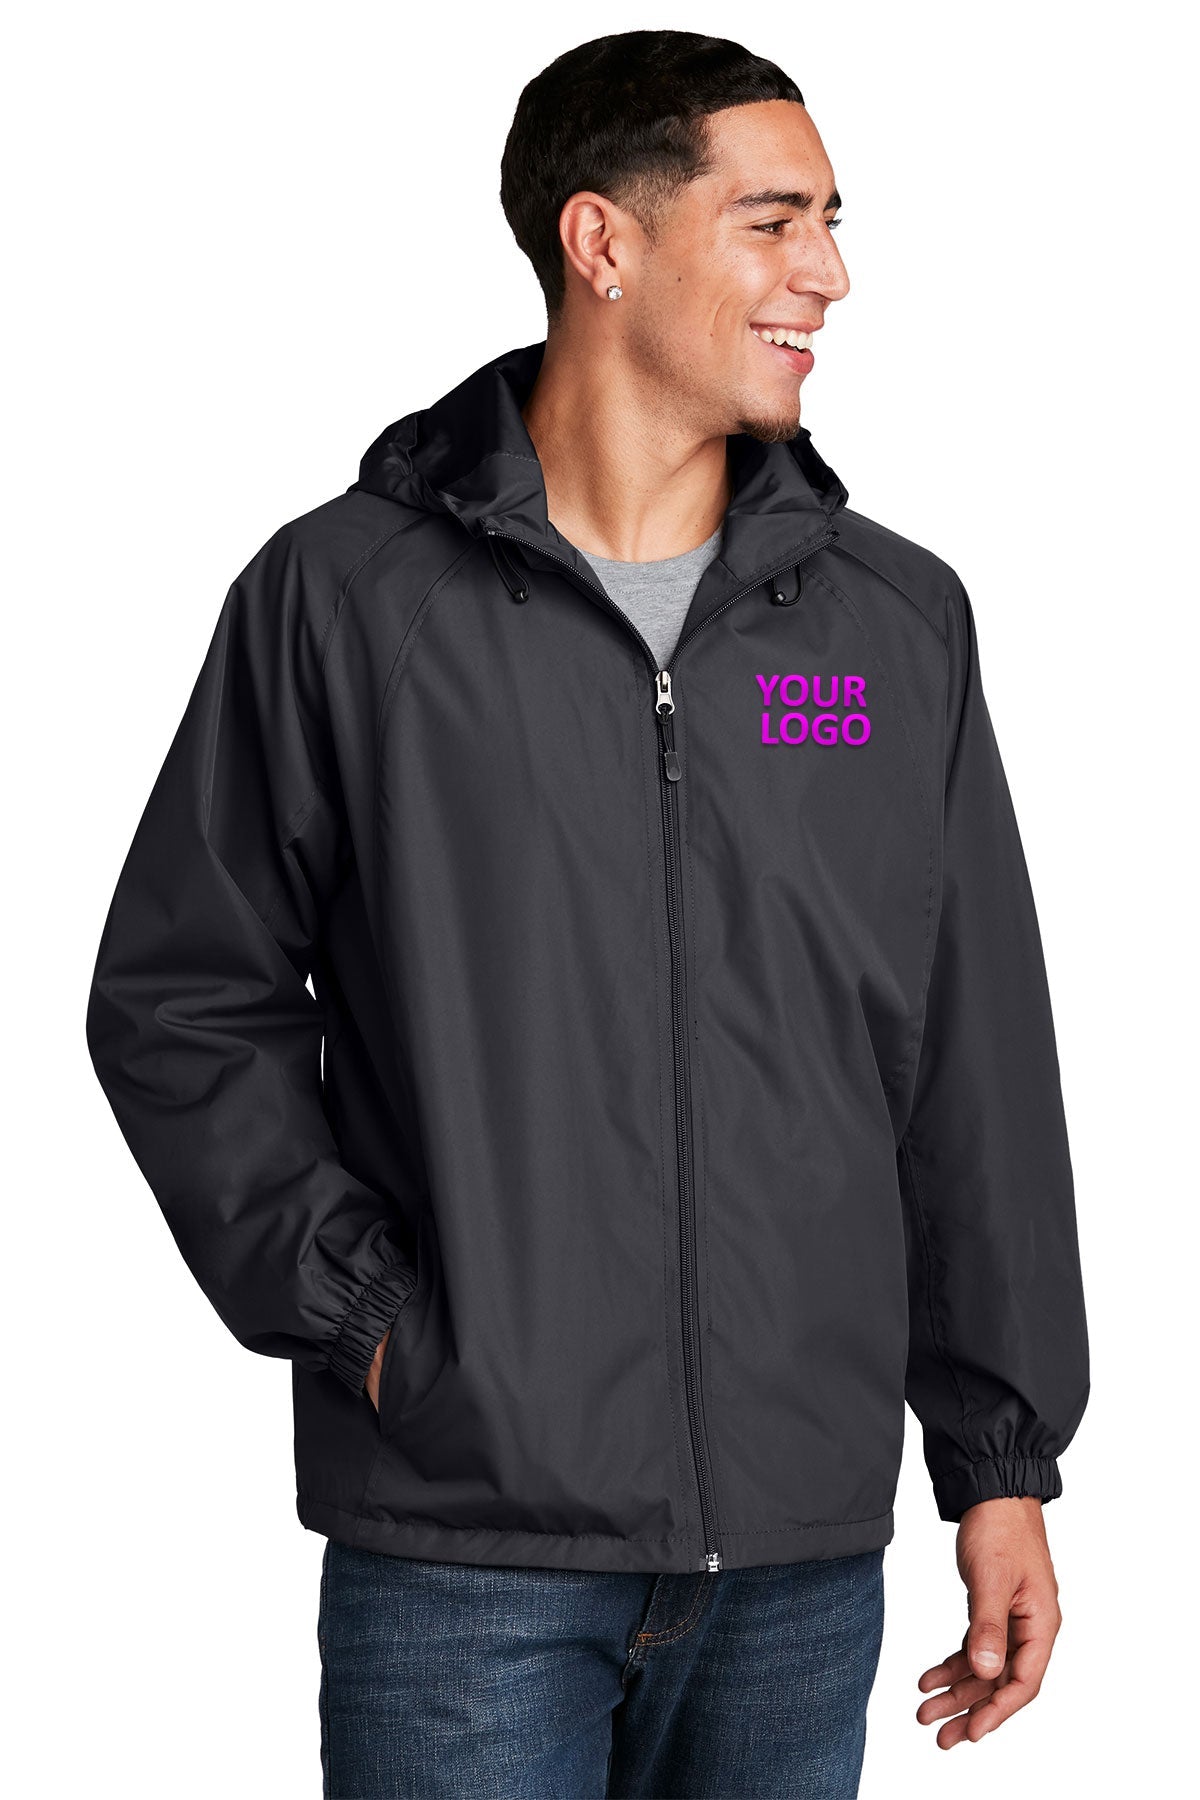 Sport-Tek Graphite Grey JST73 business logo jackets